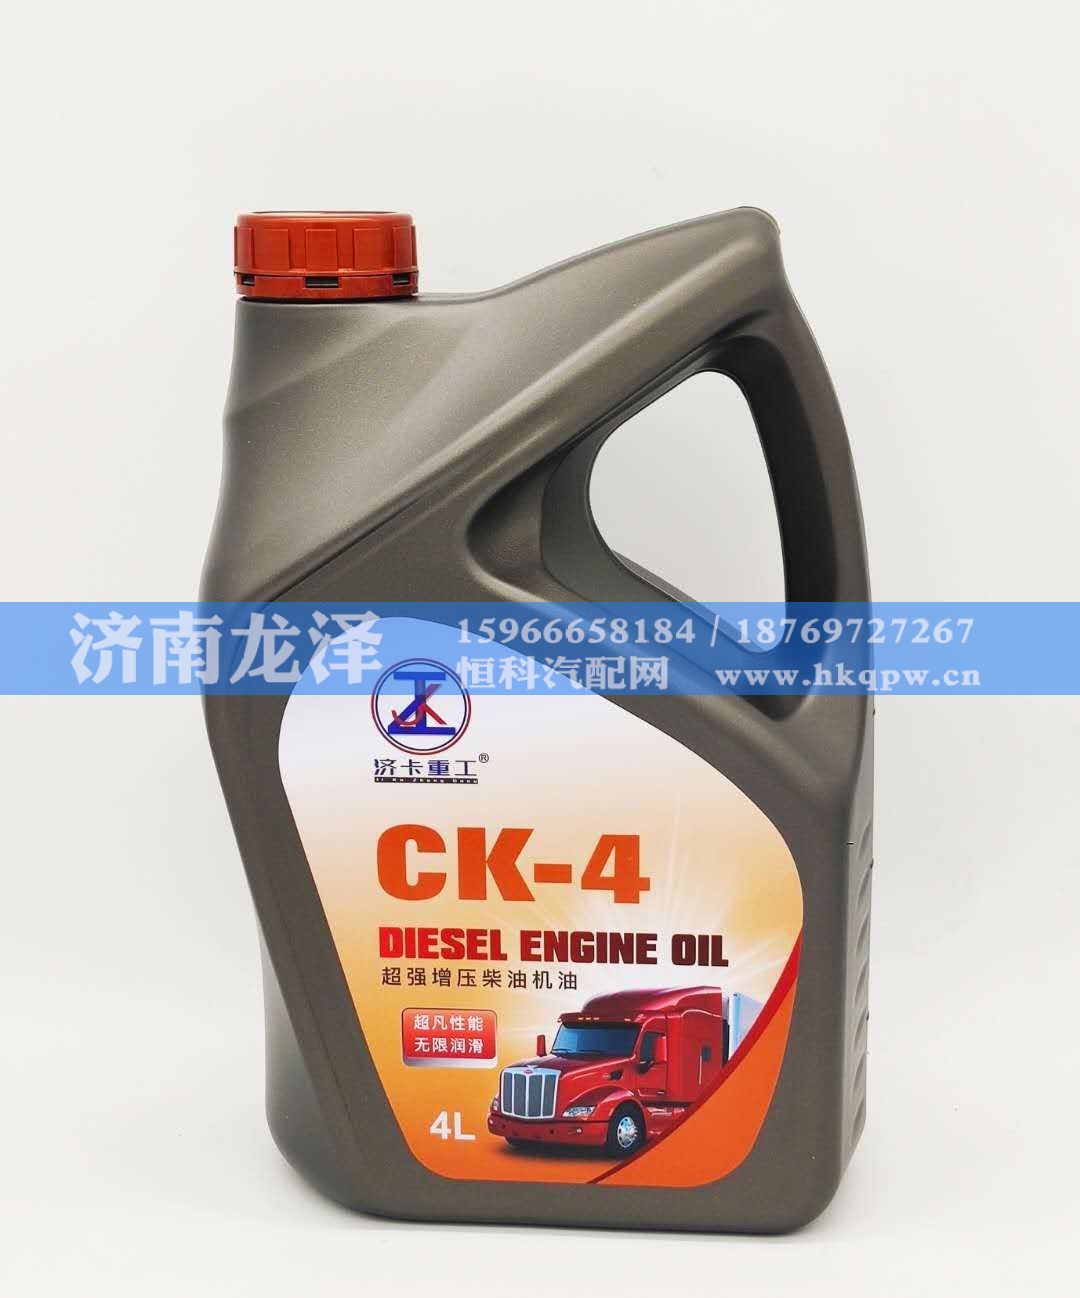 CK-4,超强增压柴油机油,山东弗壳润滑科技有限公司